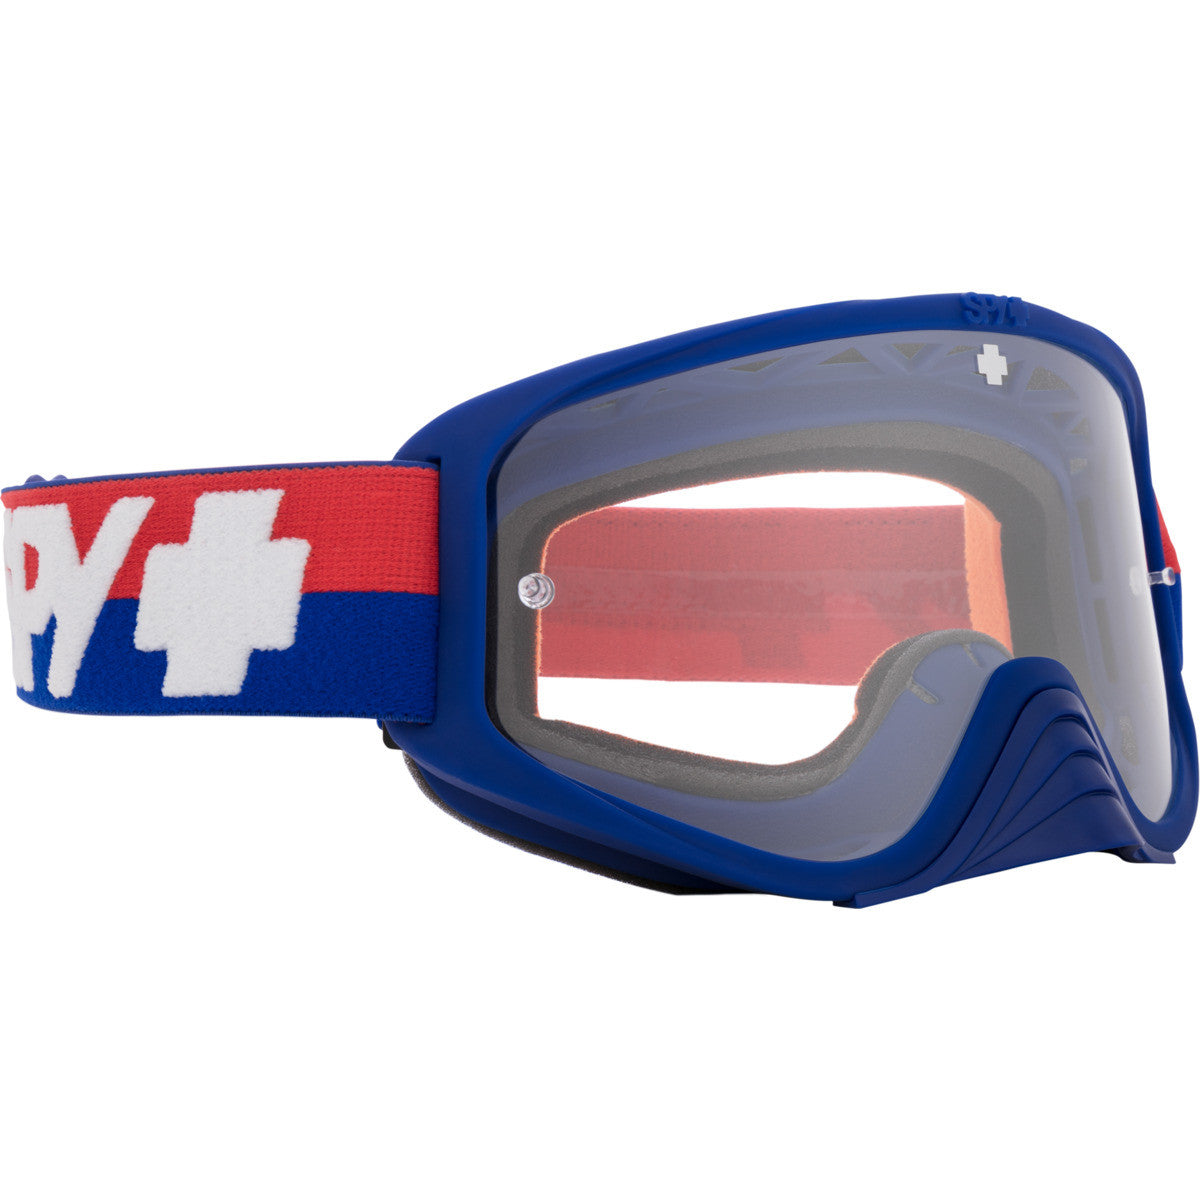 Spy WOOT Goggles  Bolt Usa Small, Small-Medium, Medium, Medium-Large M 56-58